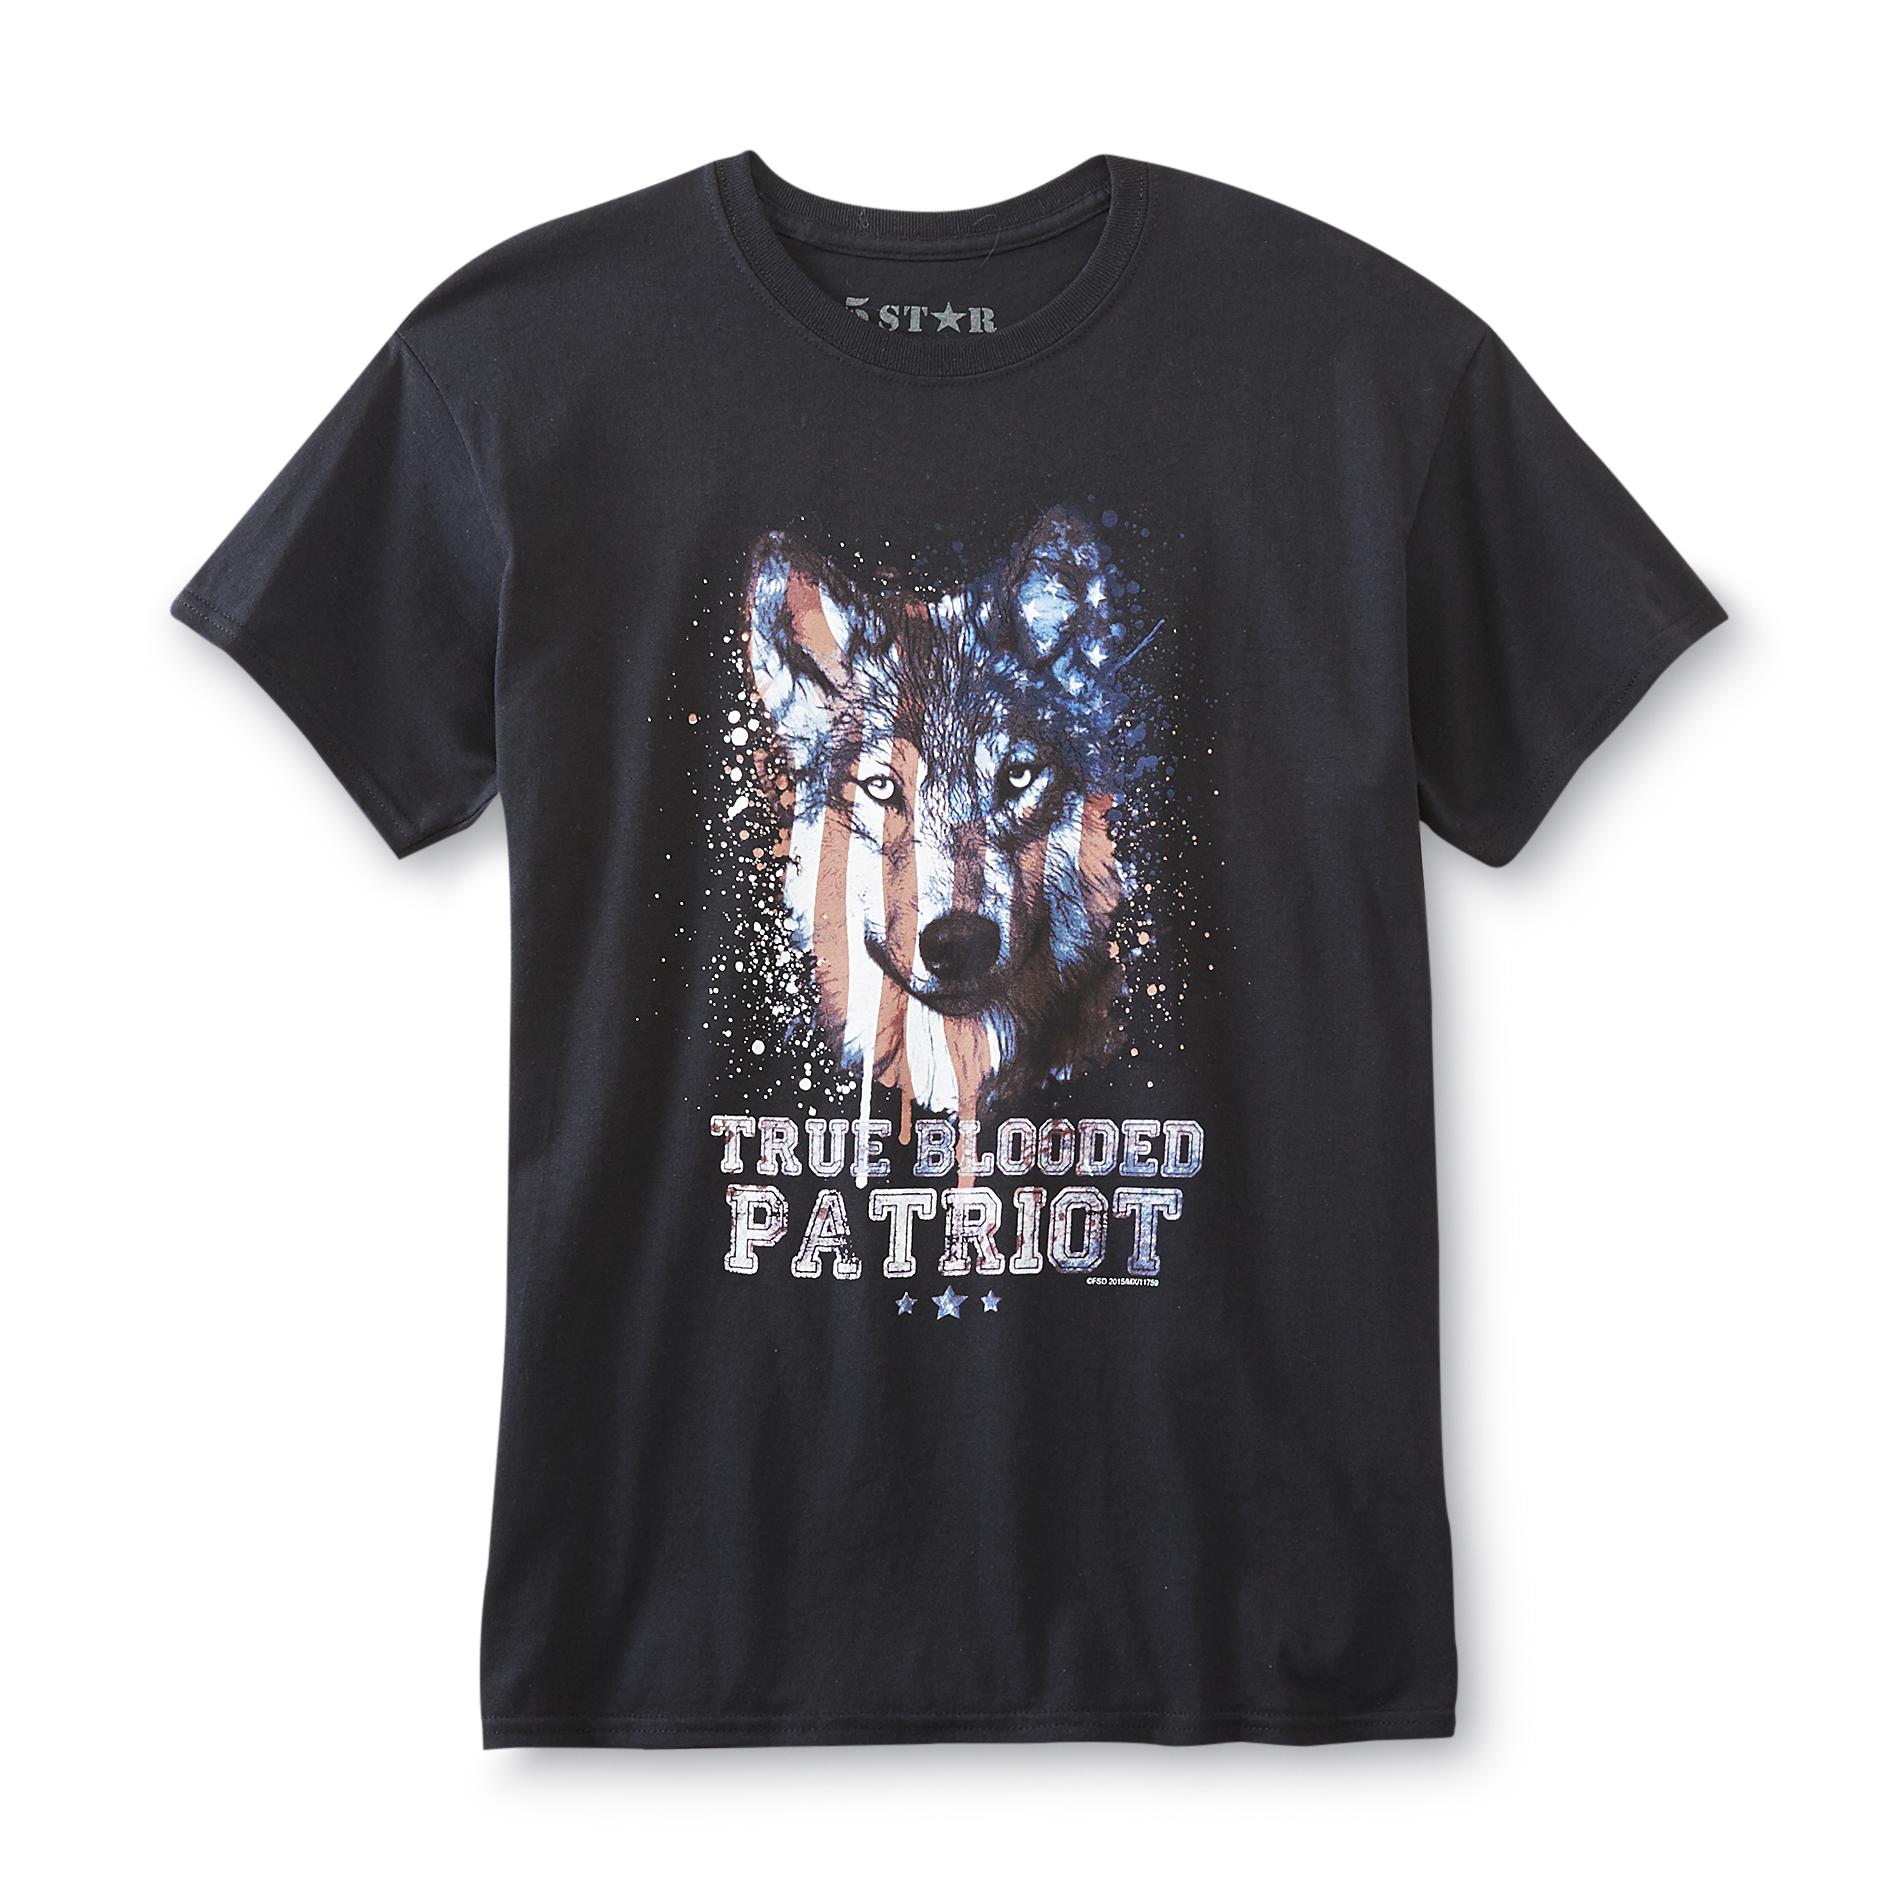 Men's Graphic T-Shirt - True Blooded Patriot